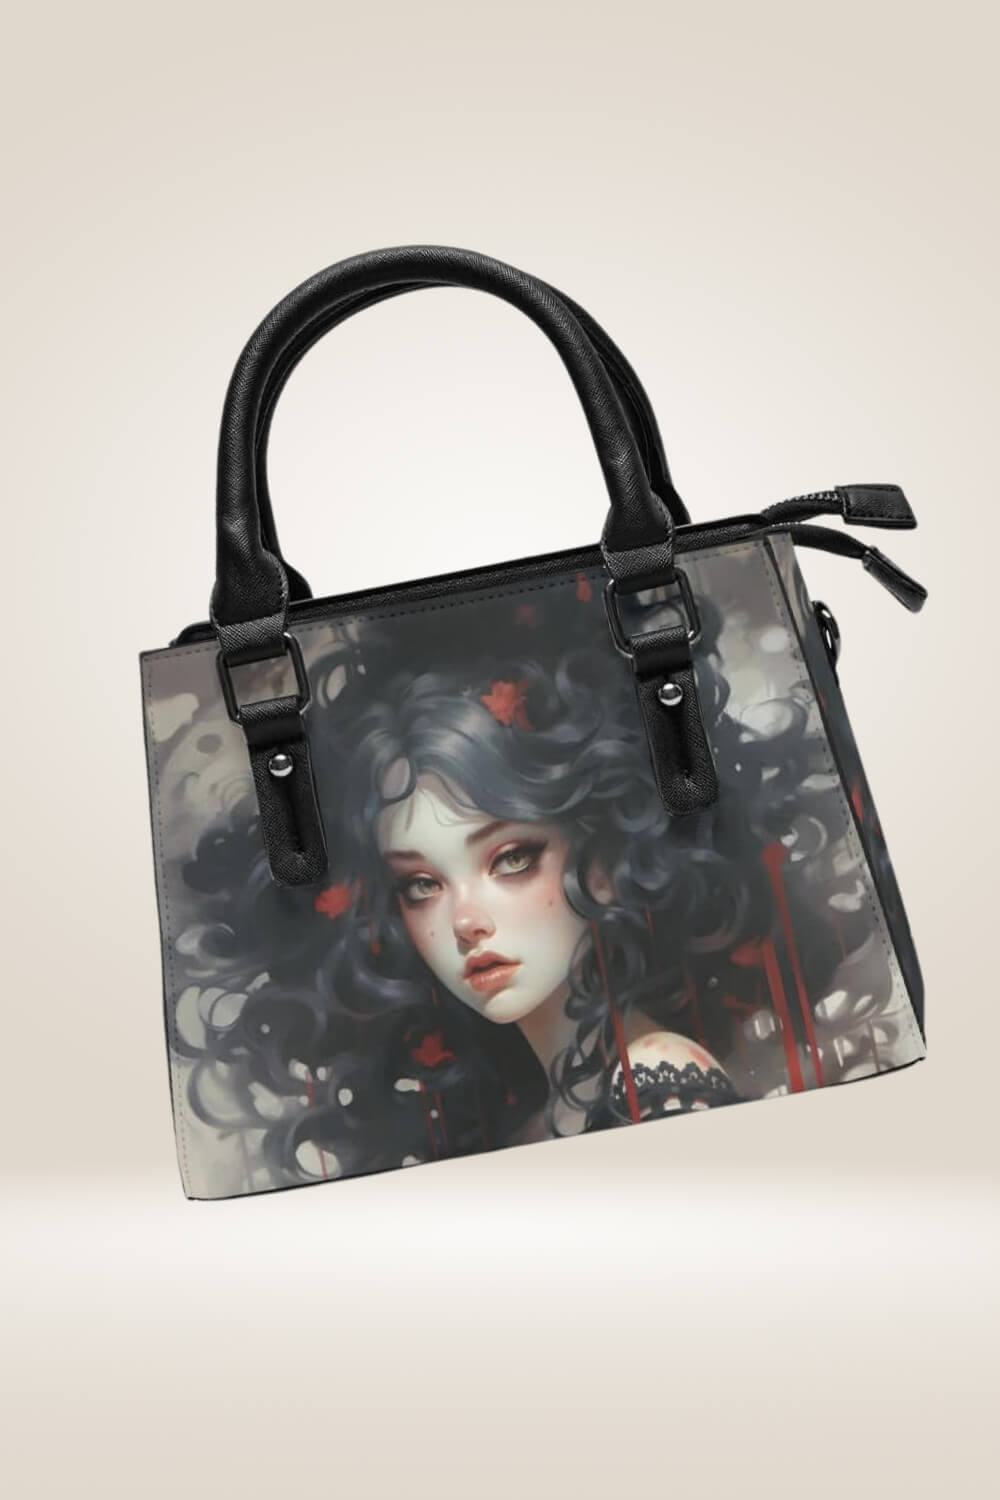 Manga Girl Black Satchel Bag - TGC Boutique - Satchel Handbag